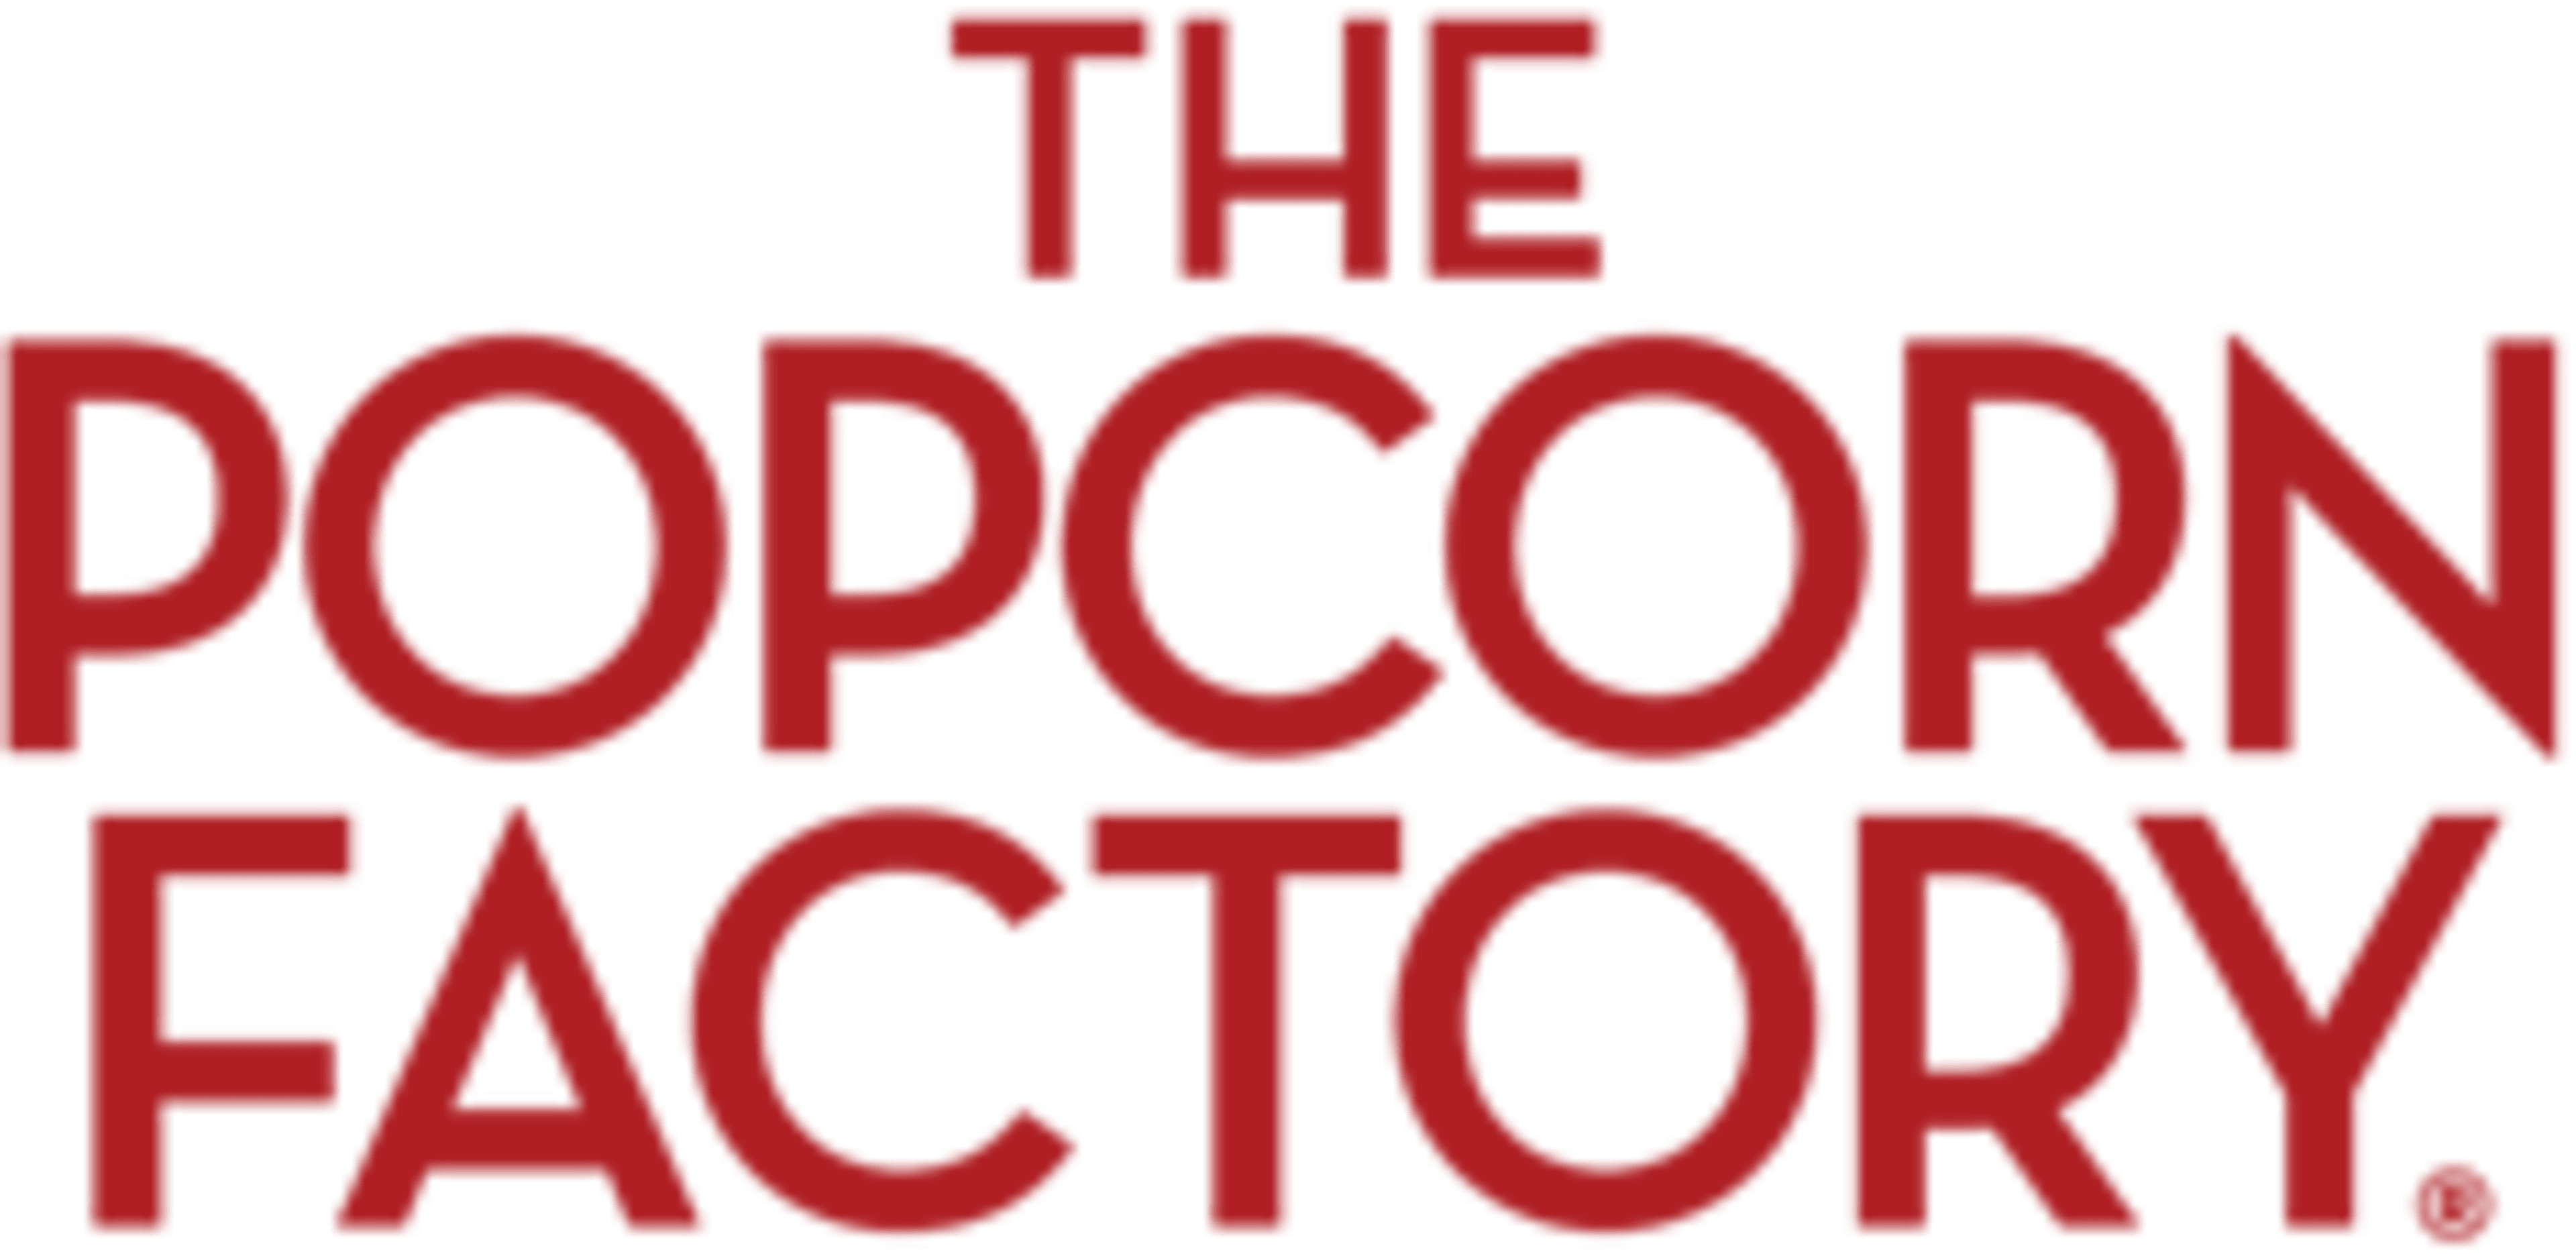 The Popcorn FactoryCode